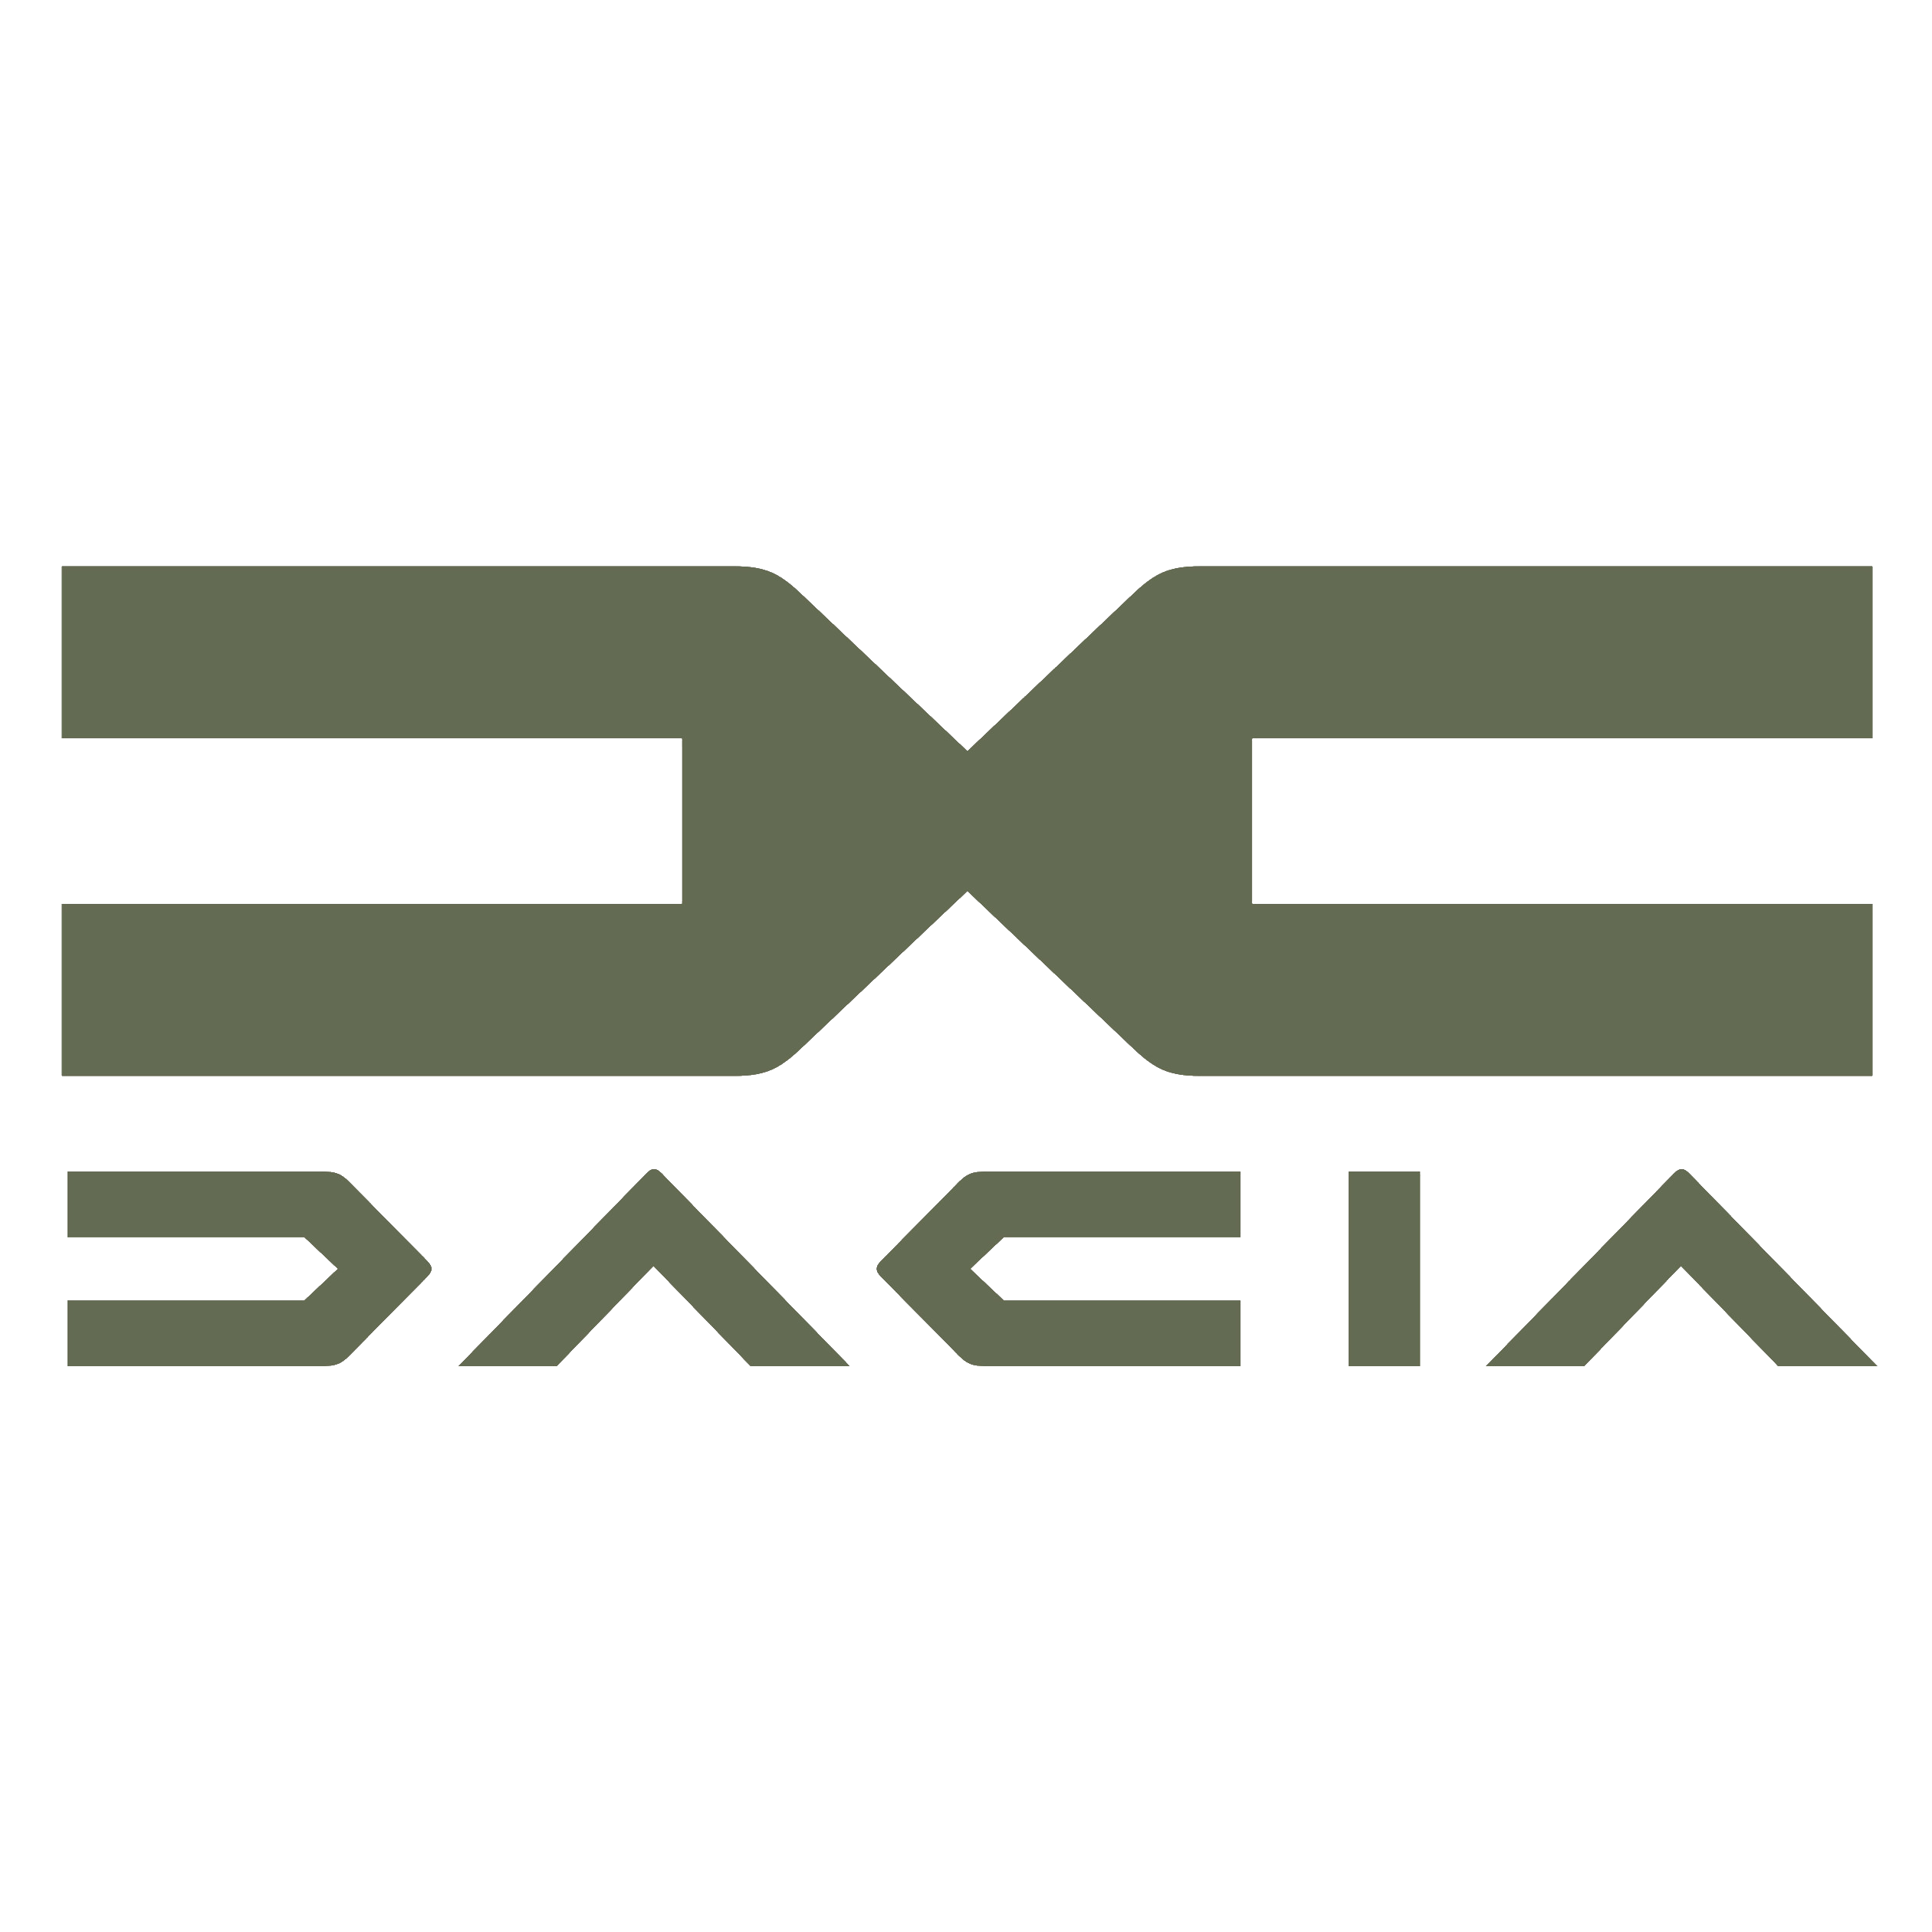 Dacia-logo.png